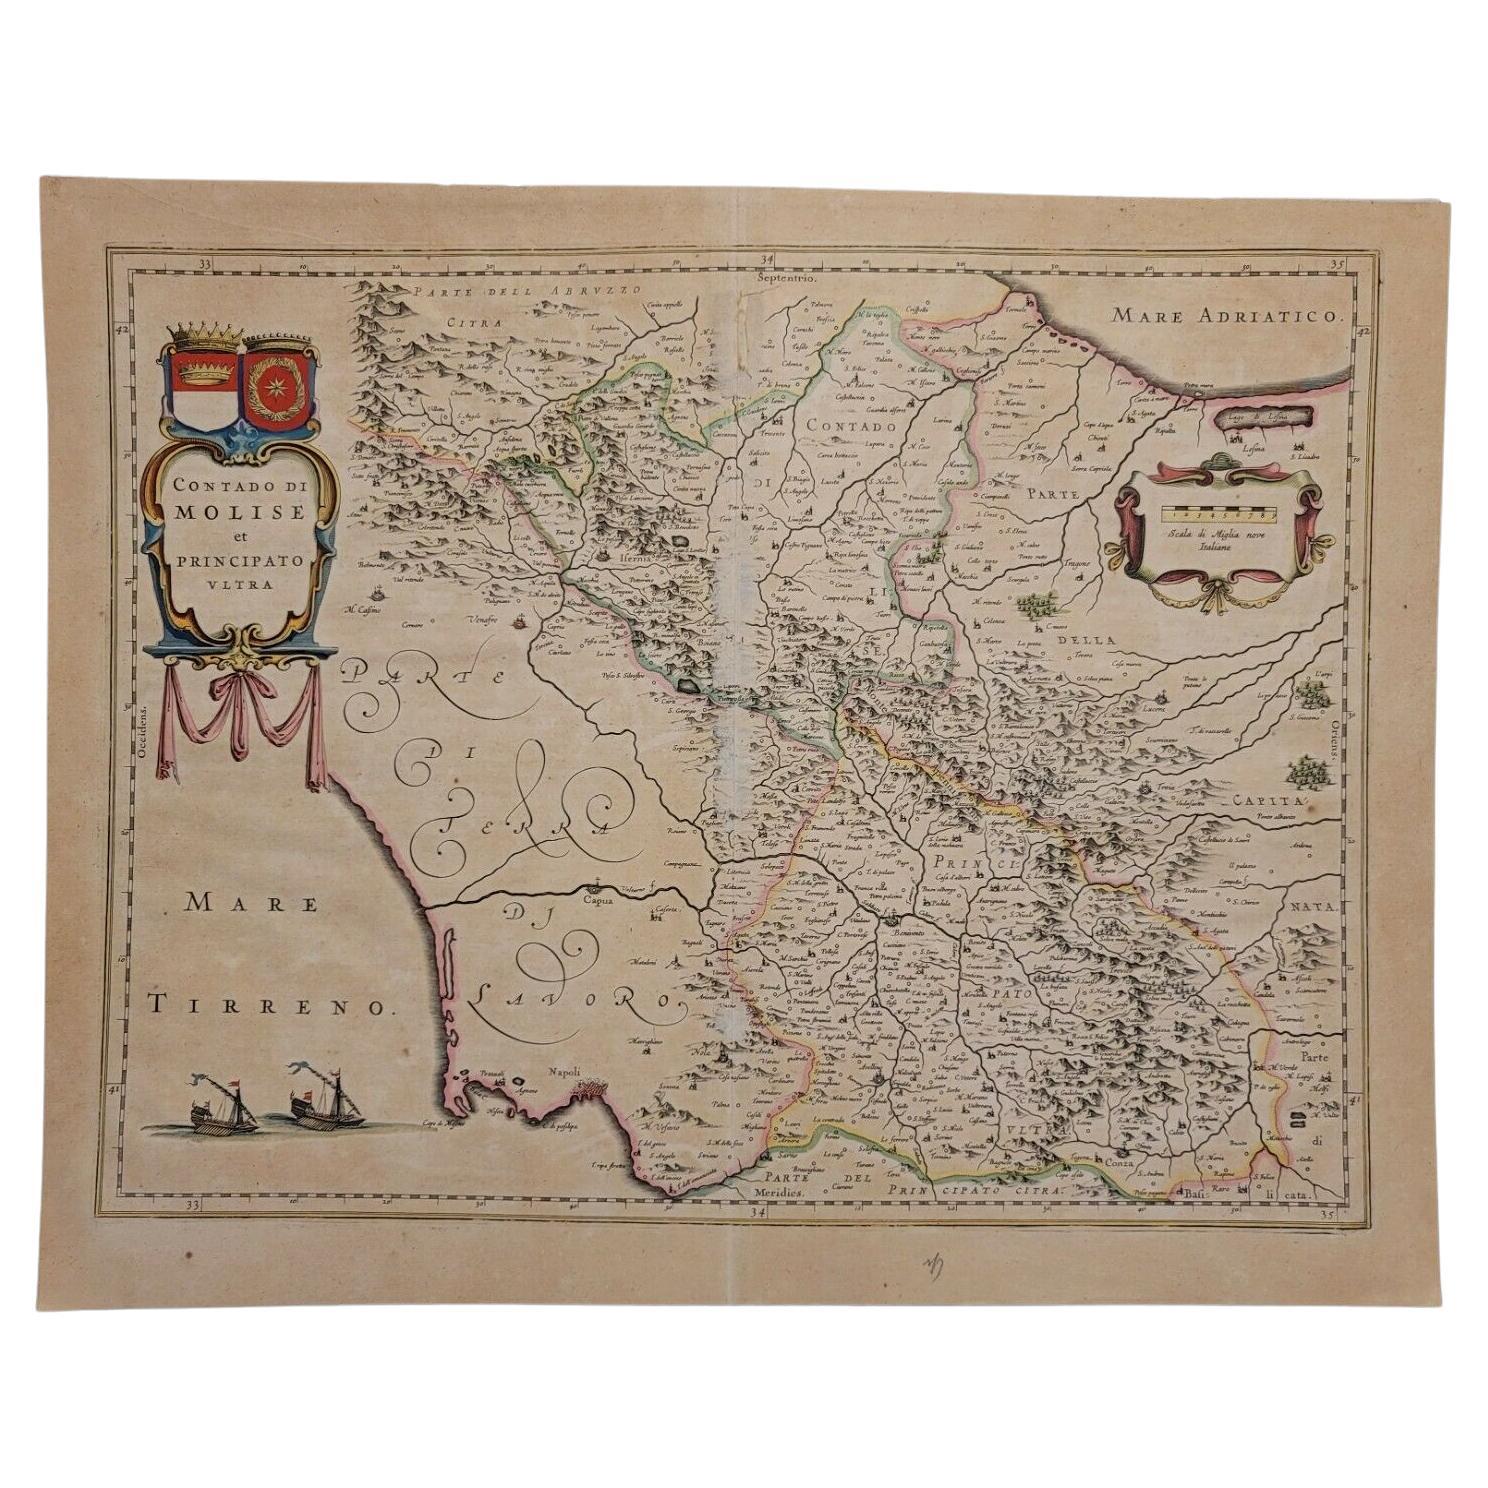 1640 Willem Blaeu Karte mit dem Titel „Contado di molise et principato vltra“, Ric.a003